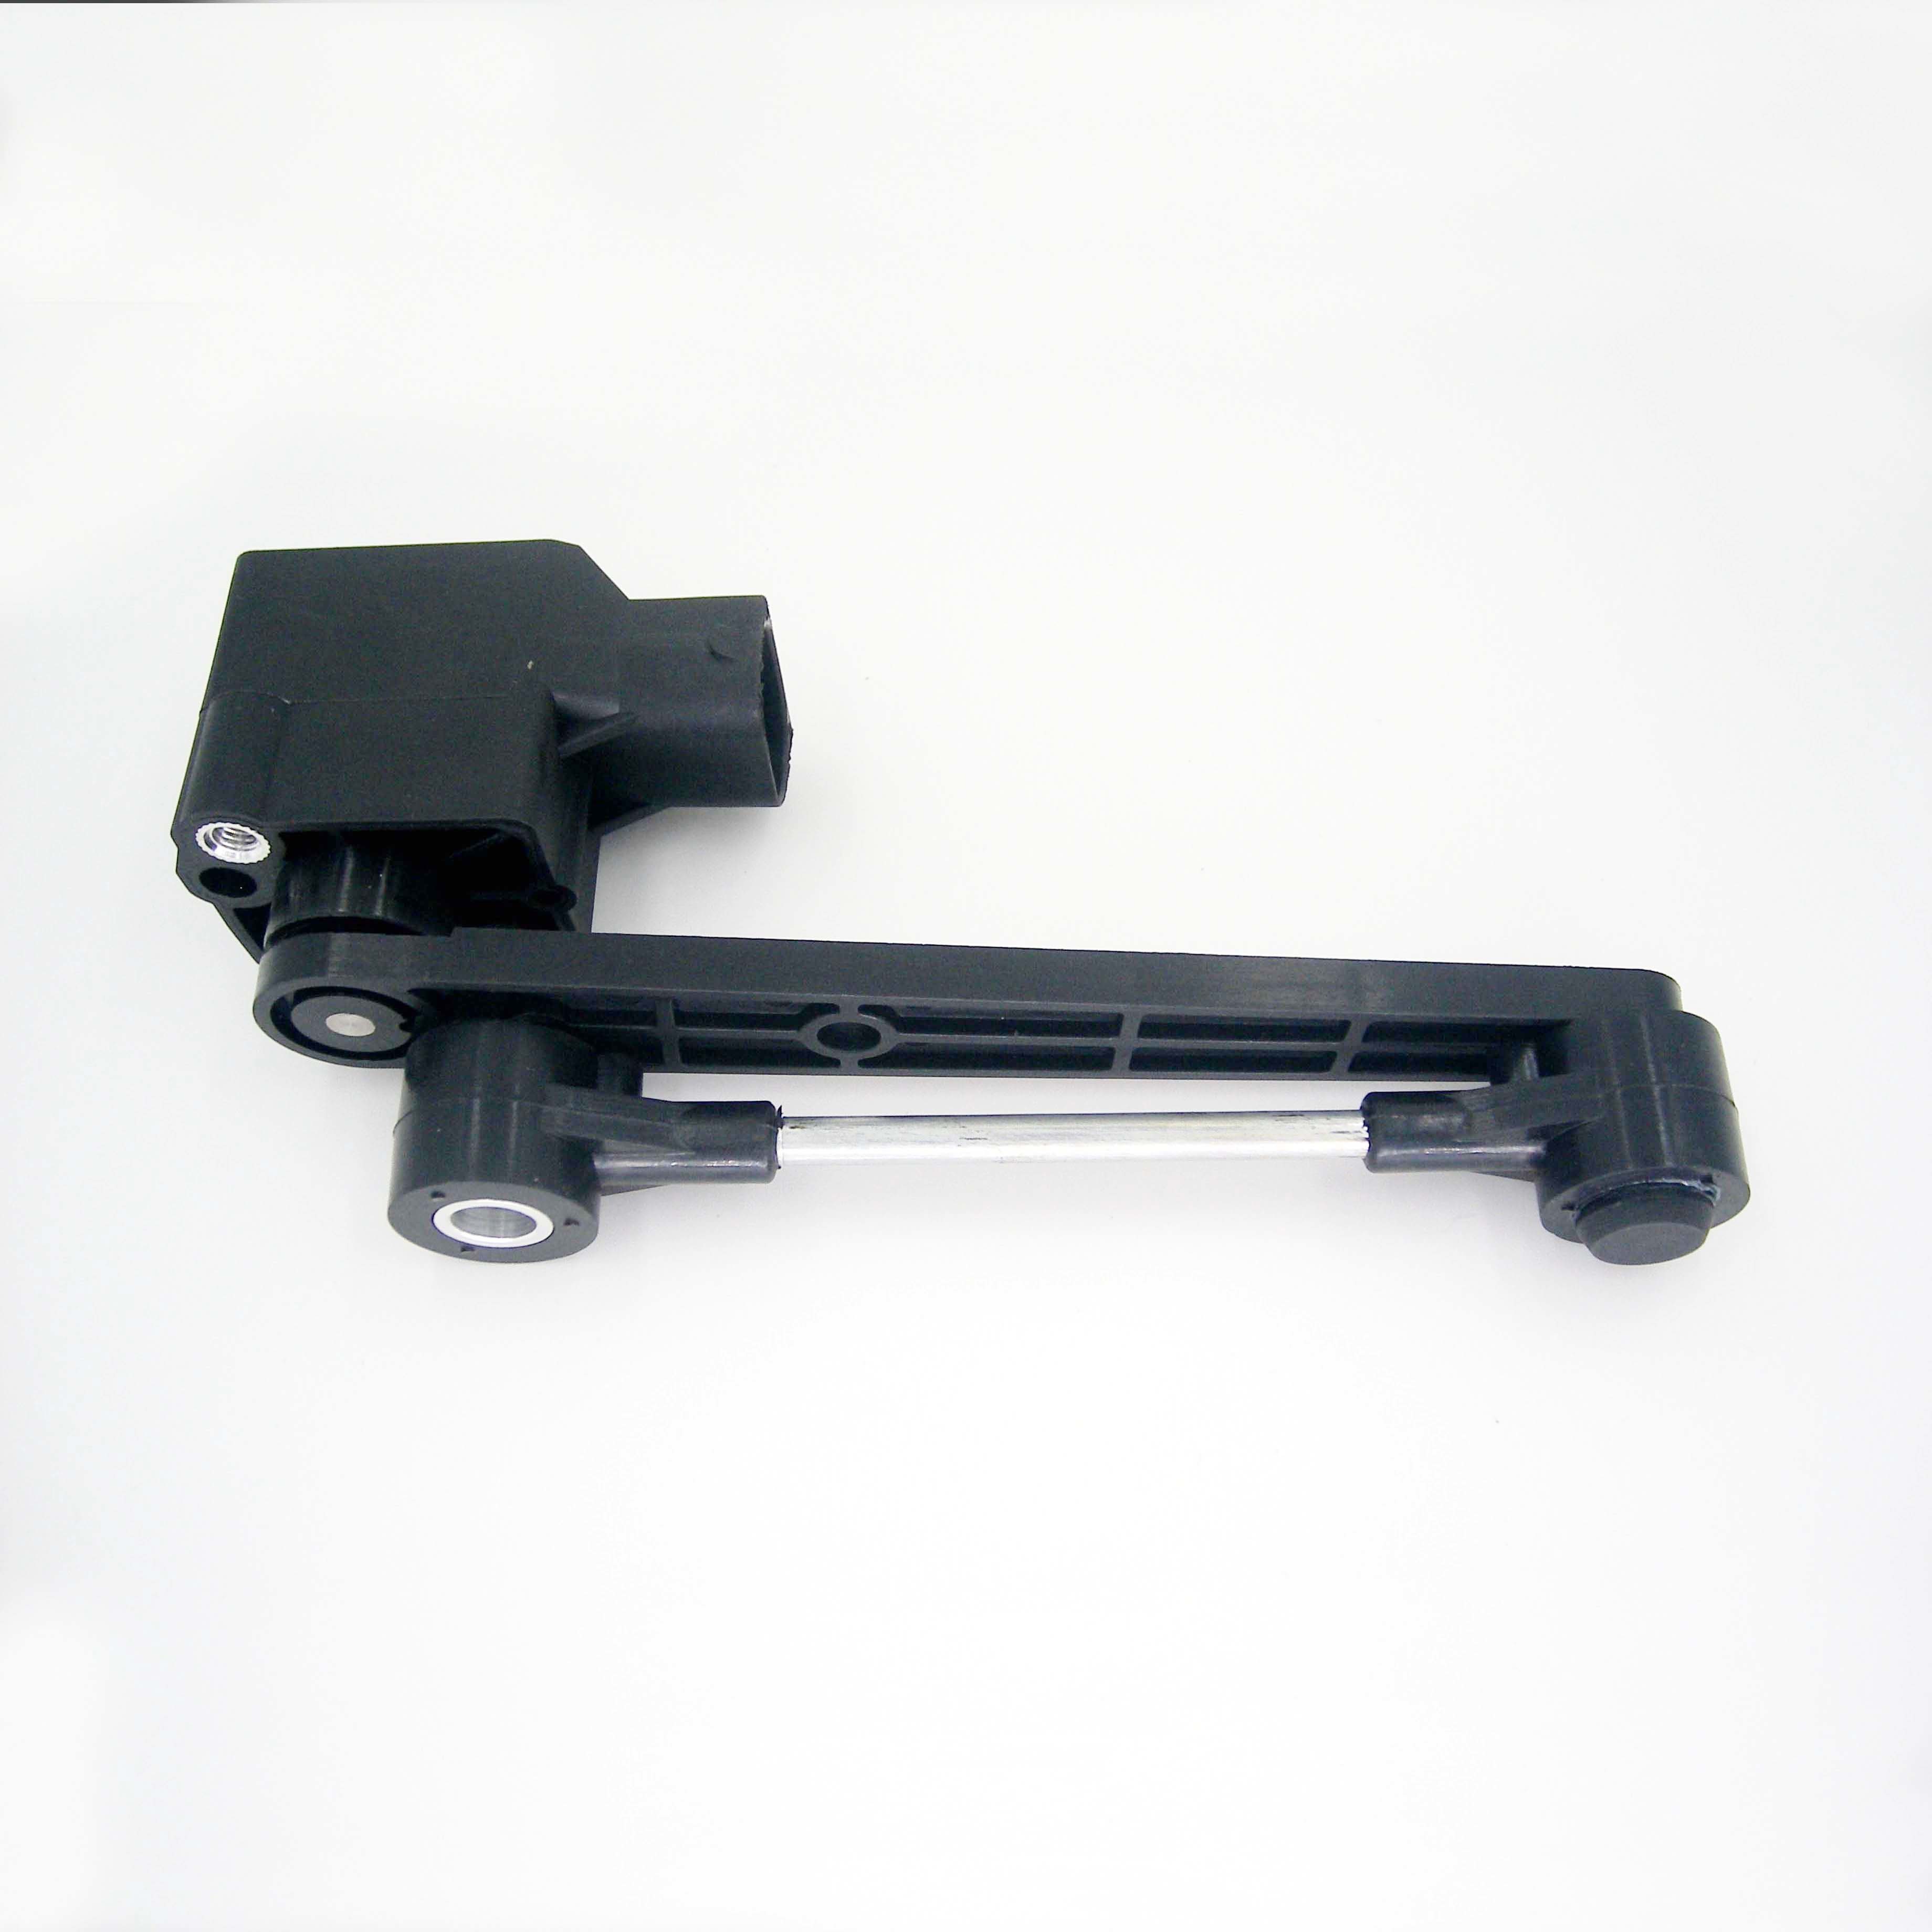 Headlight Level sensor Suspension height sensor for Land Rover  Range Rover  Discovery 2   RQH100030 6784696